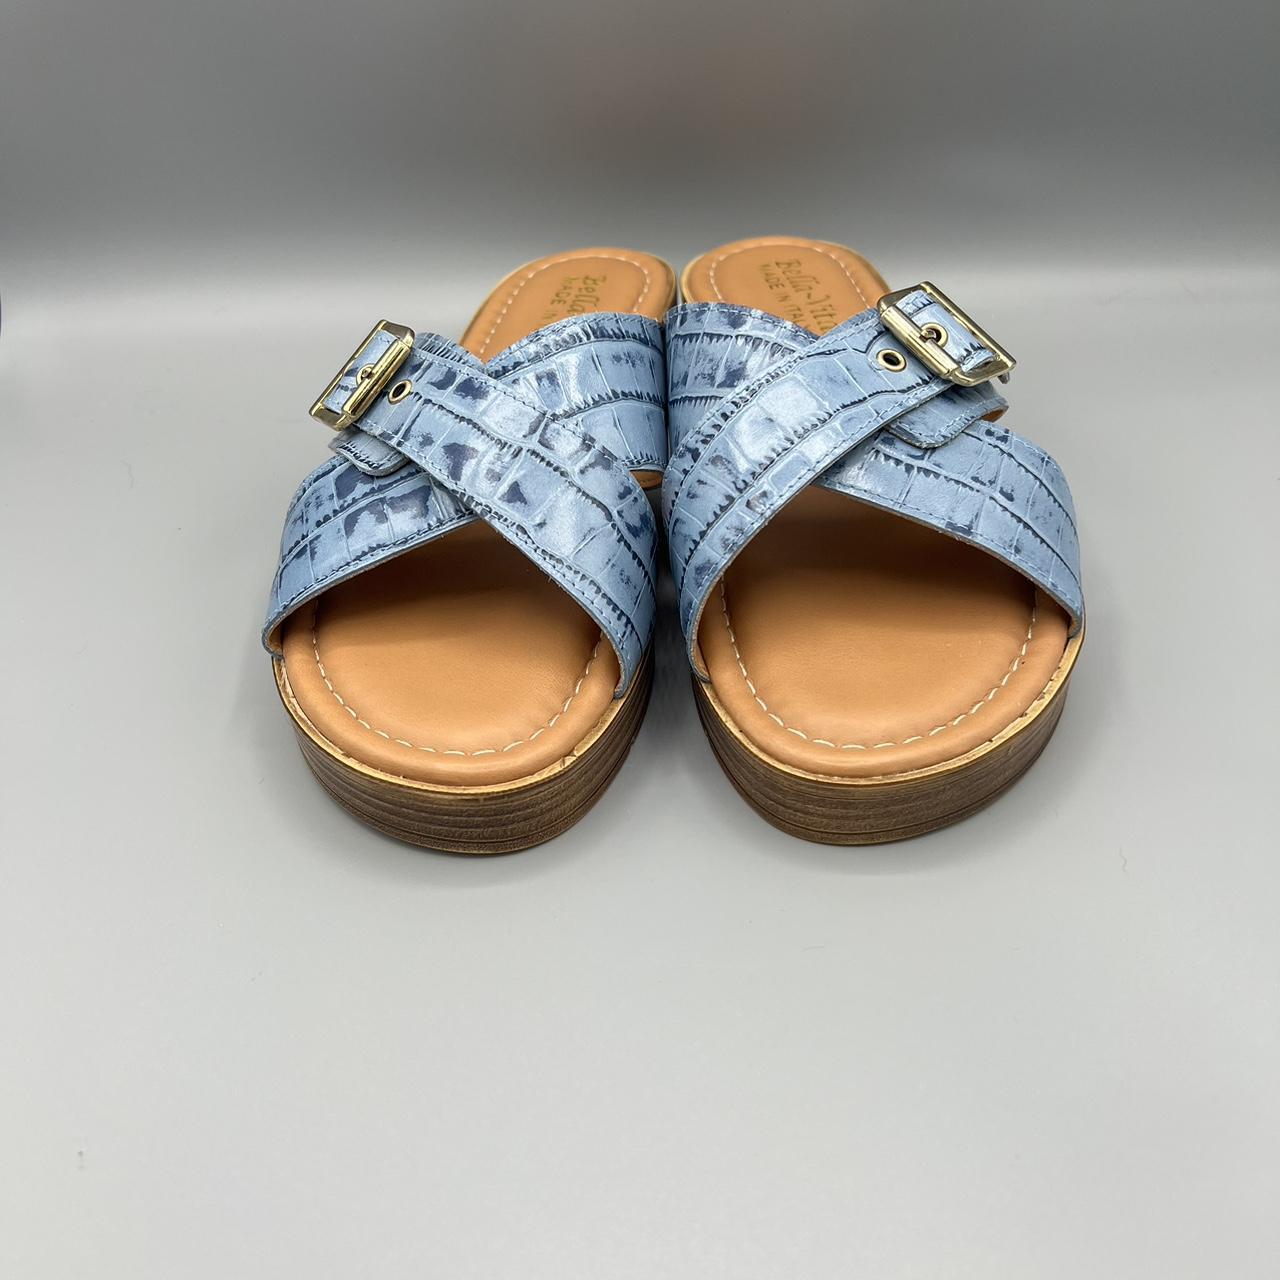 Bella Vita Women's Blue and Brown Sandals (5)